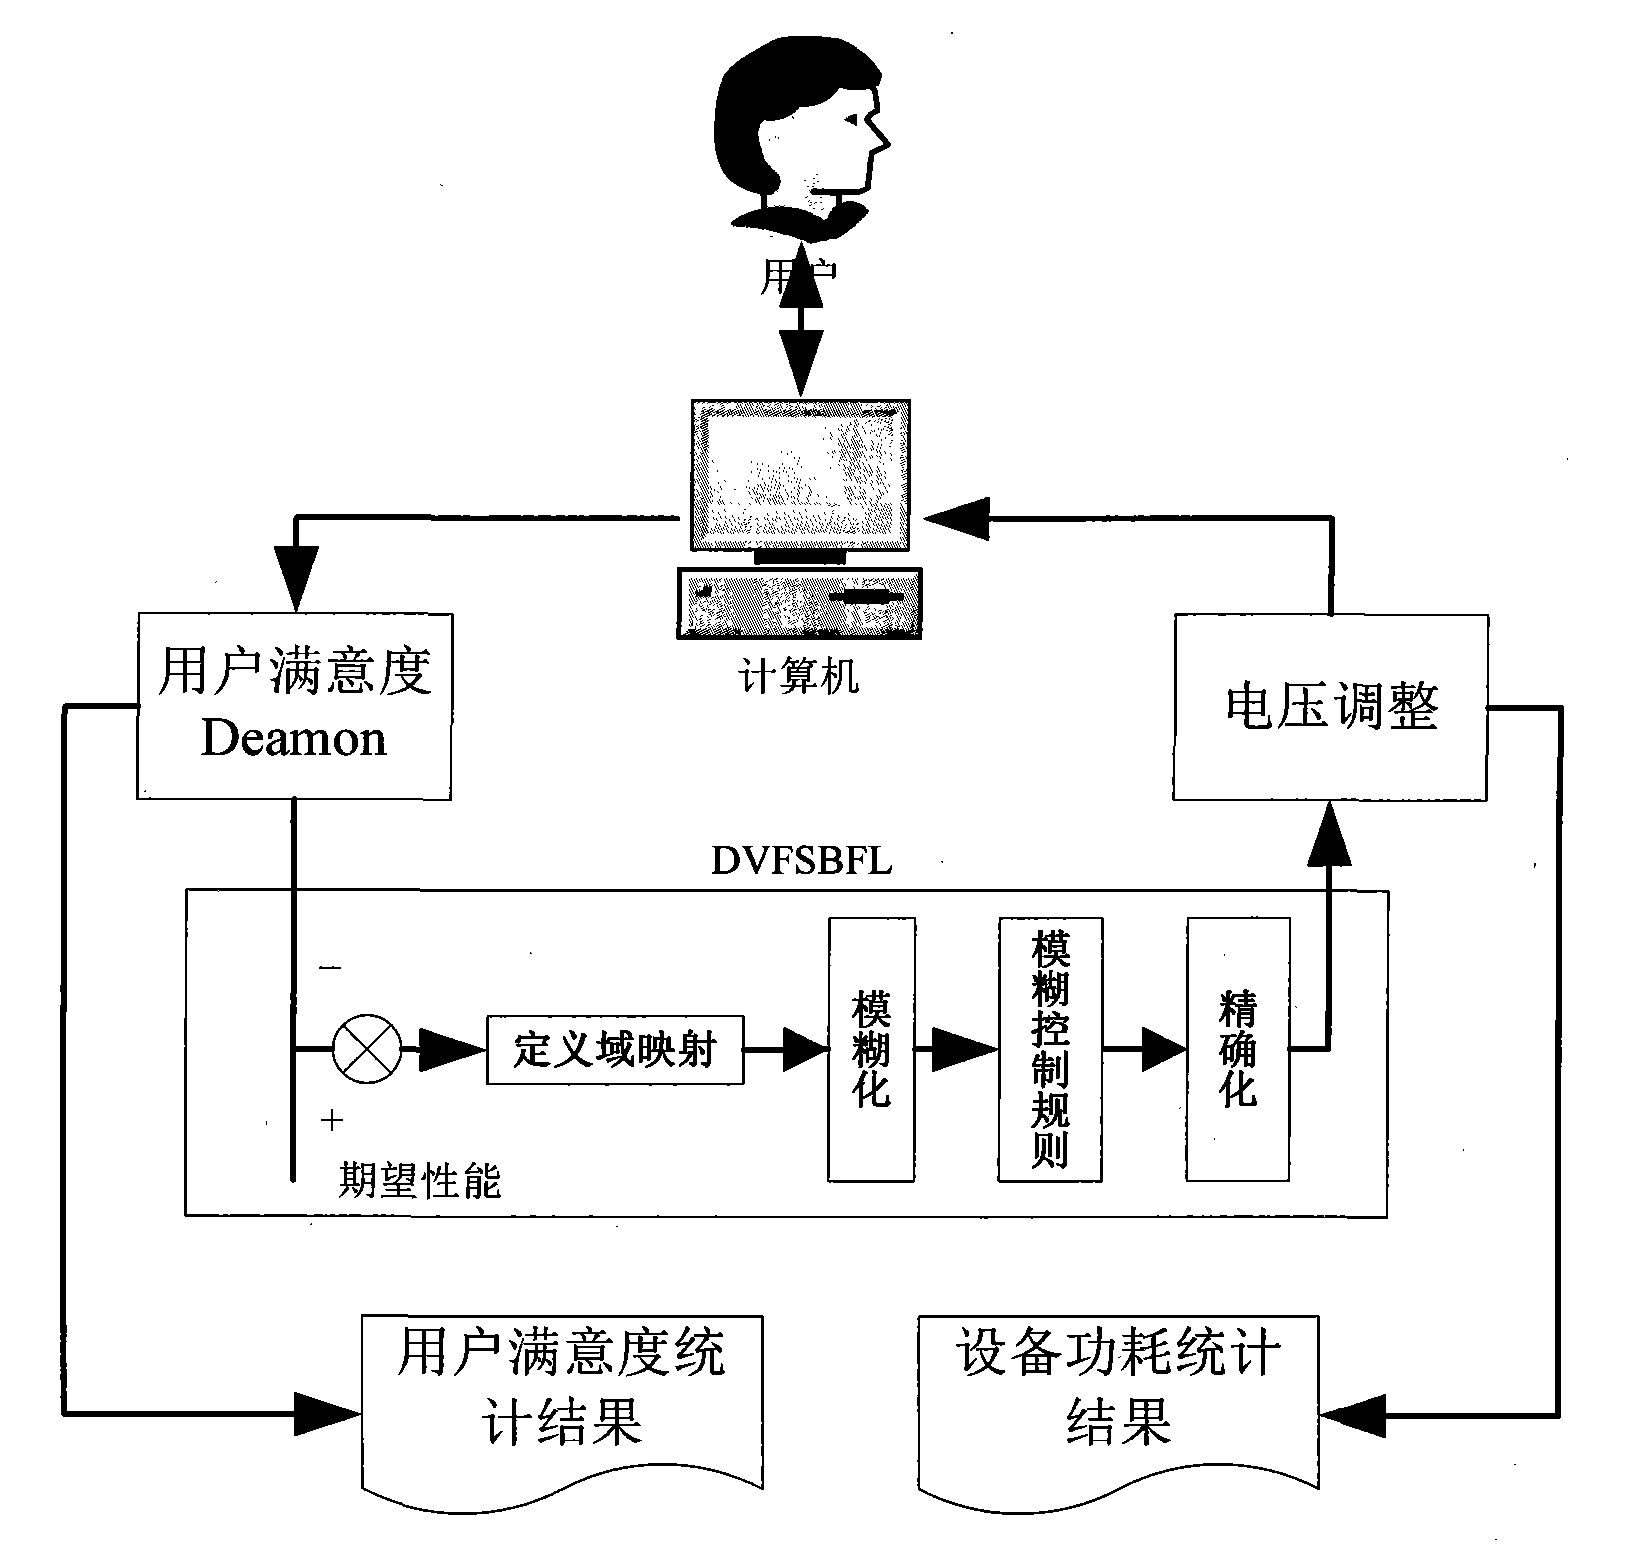 Dynamic voltage regulation design method based on fuzzy logic control